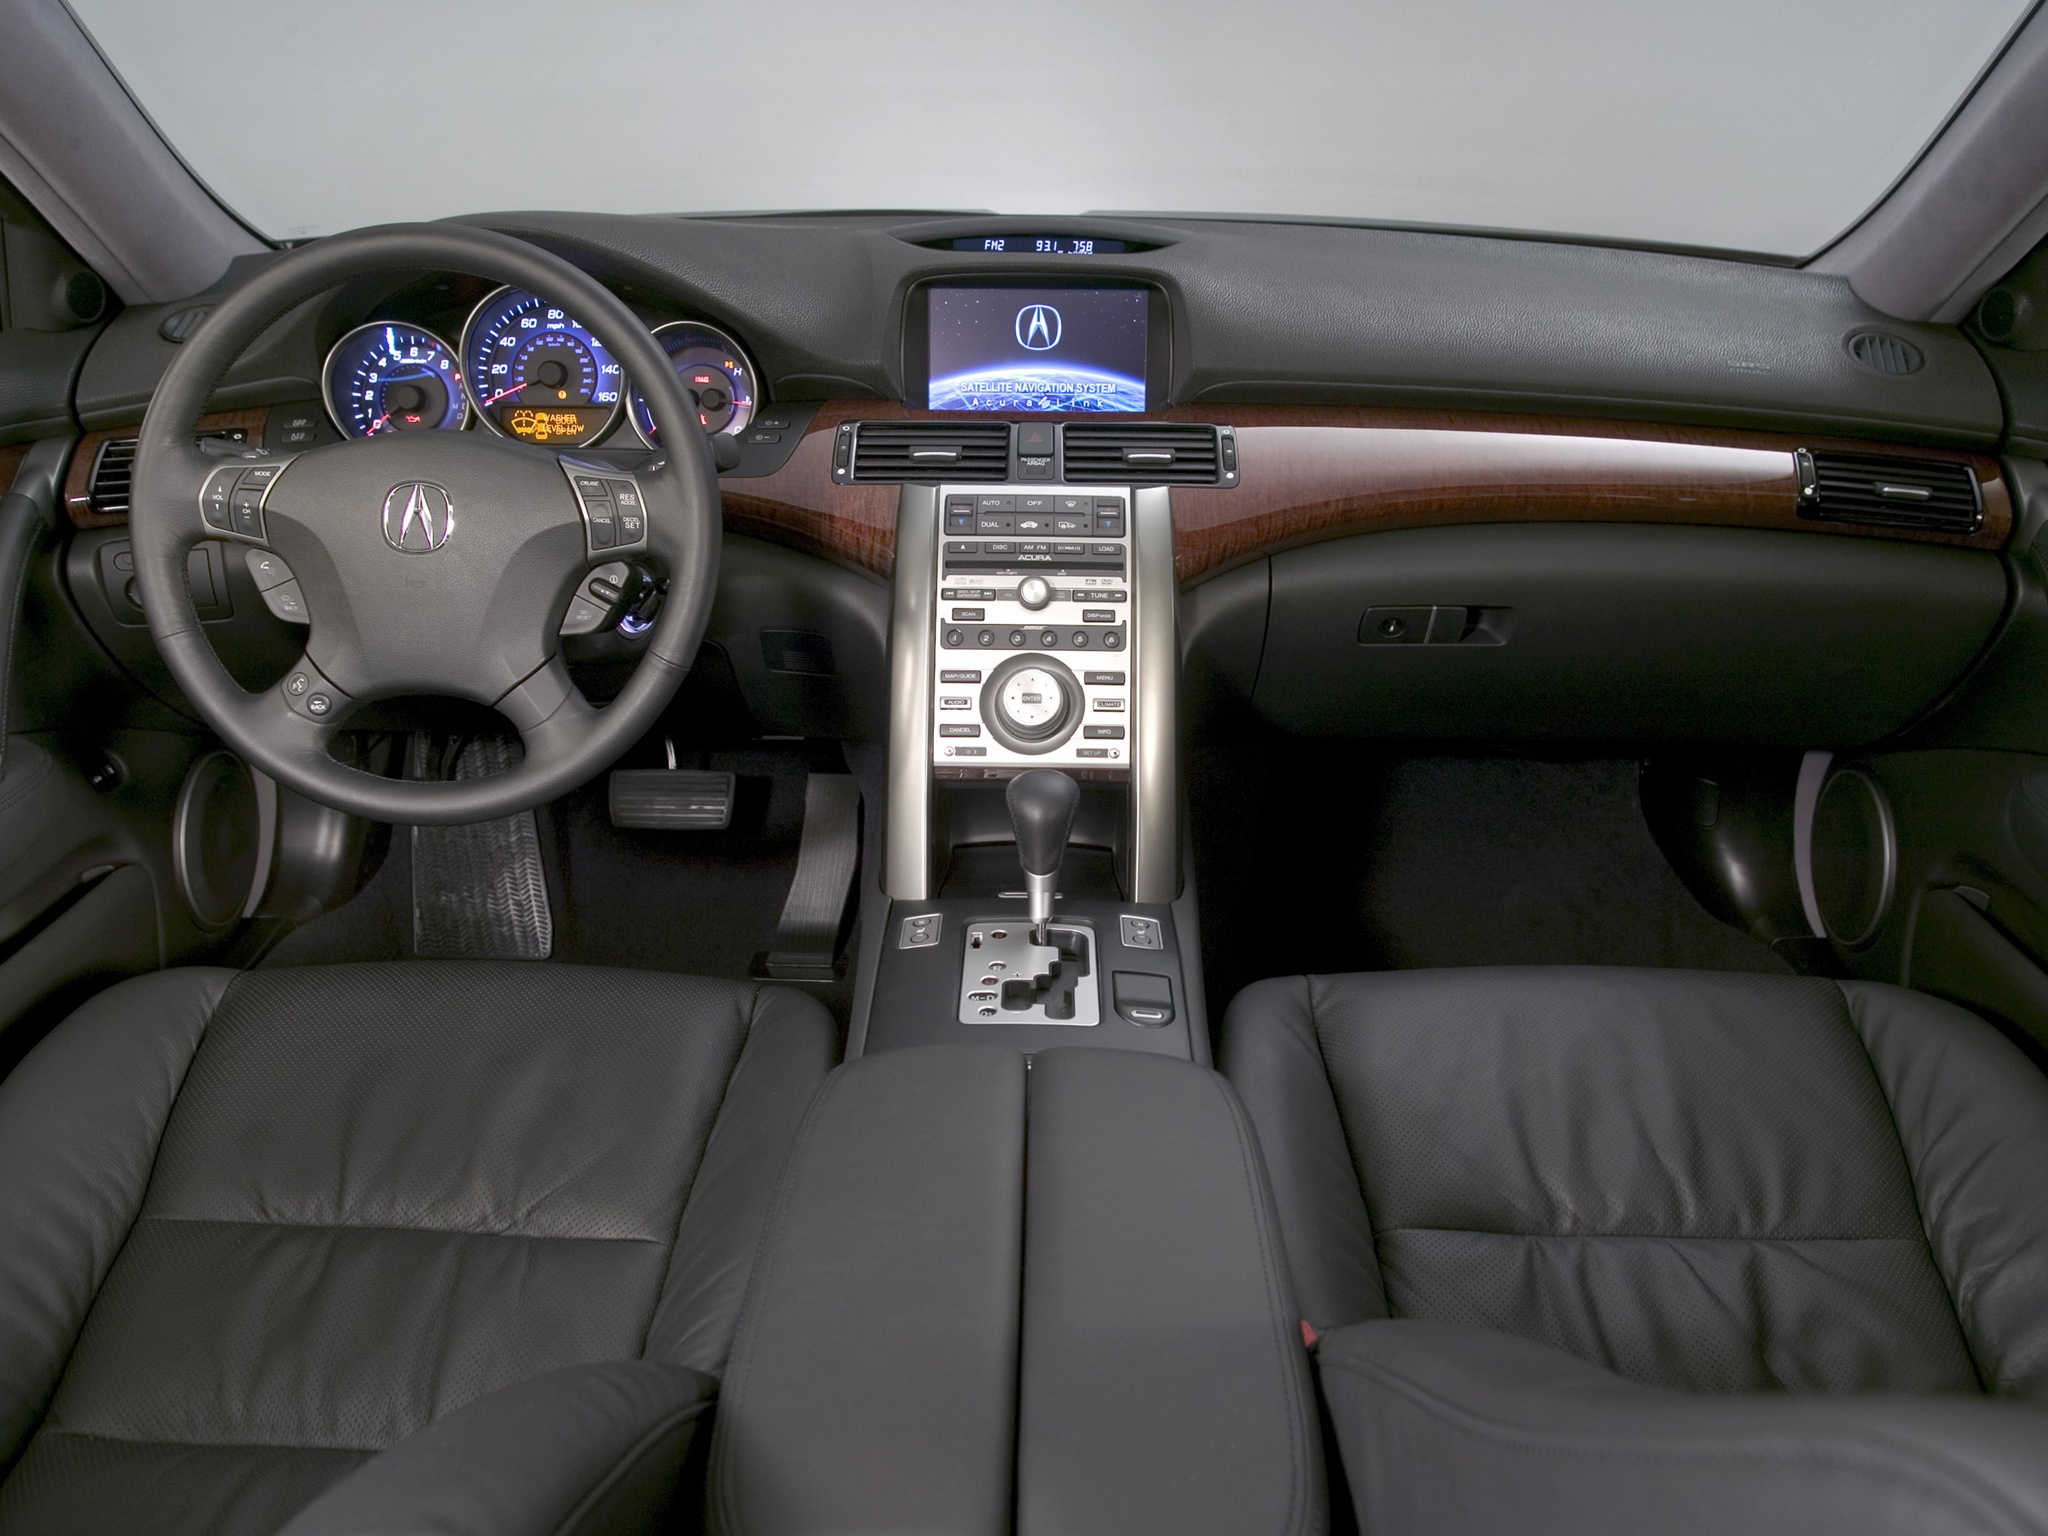 acura, interior, cars, akura, steering wheel, rudder, salon, speedometer, rl for android